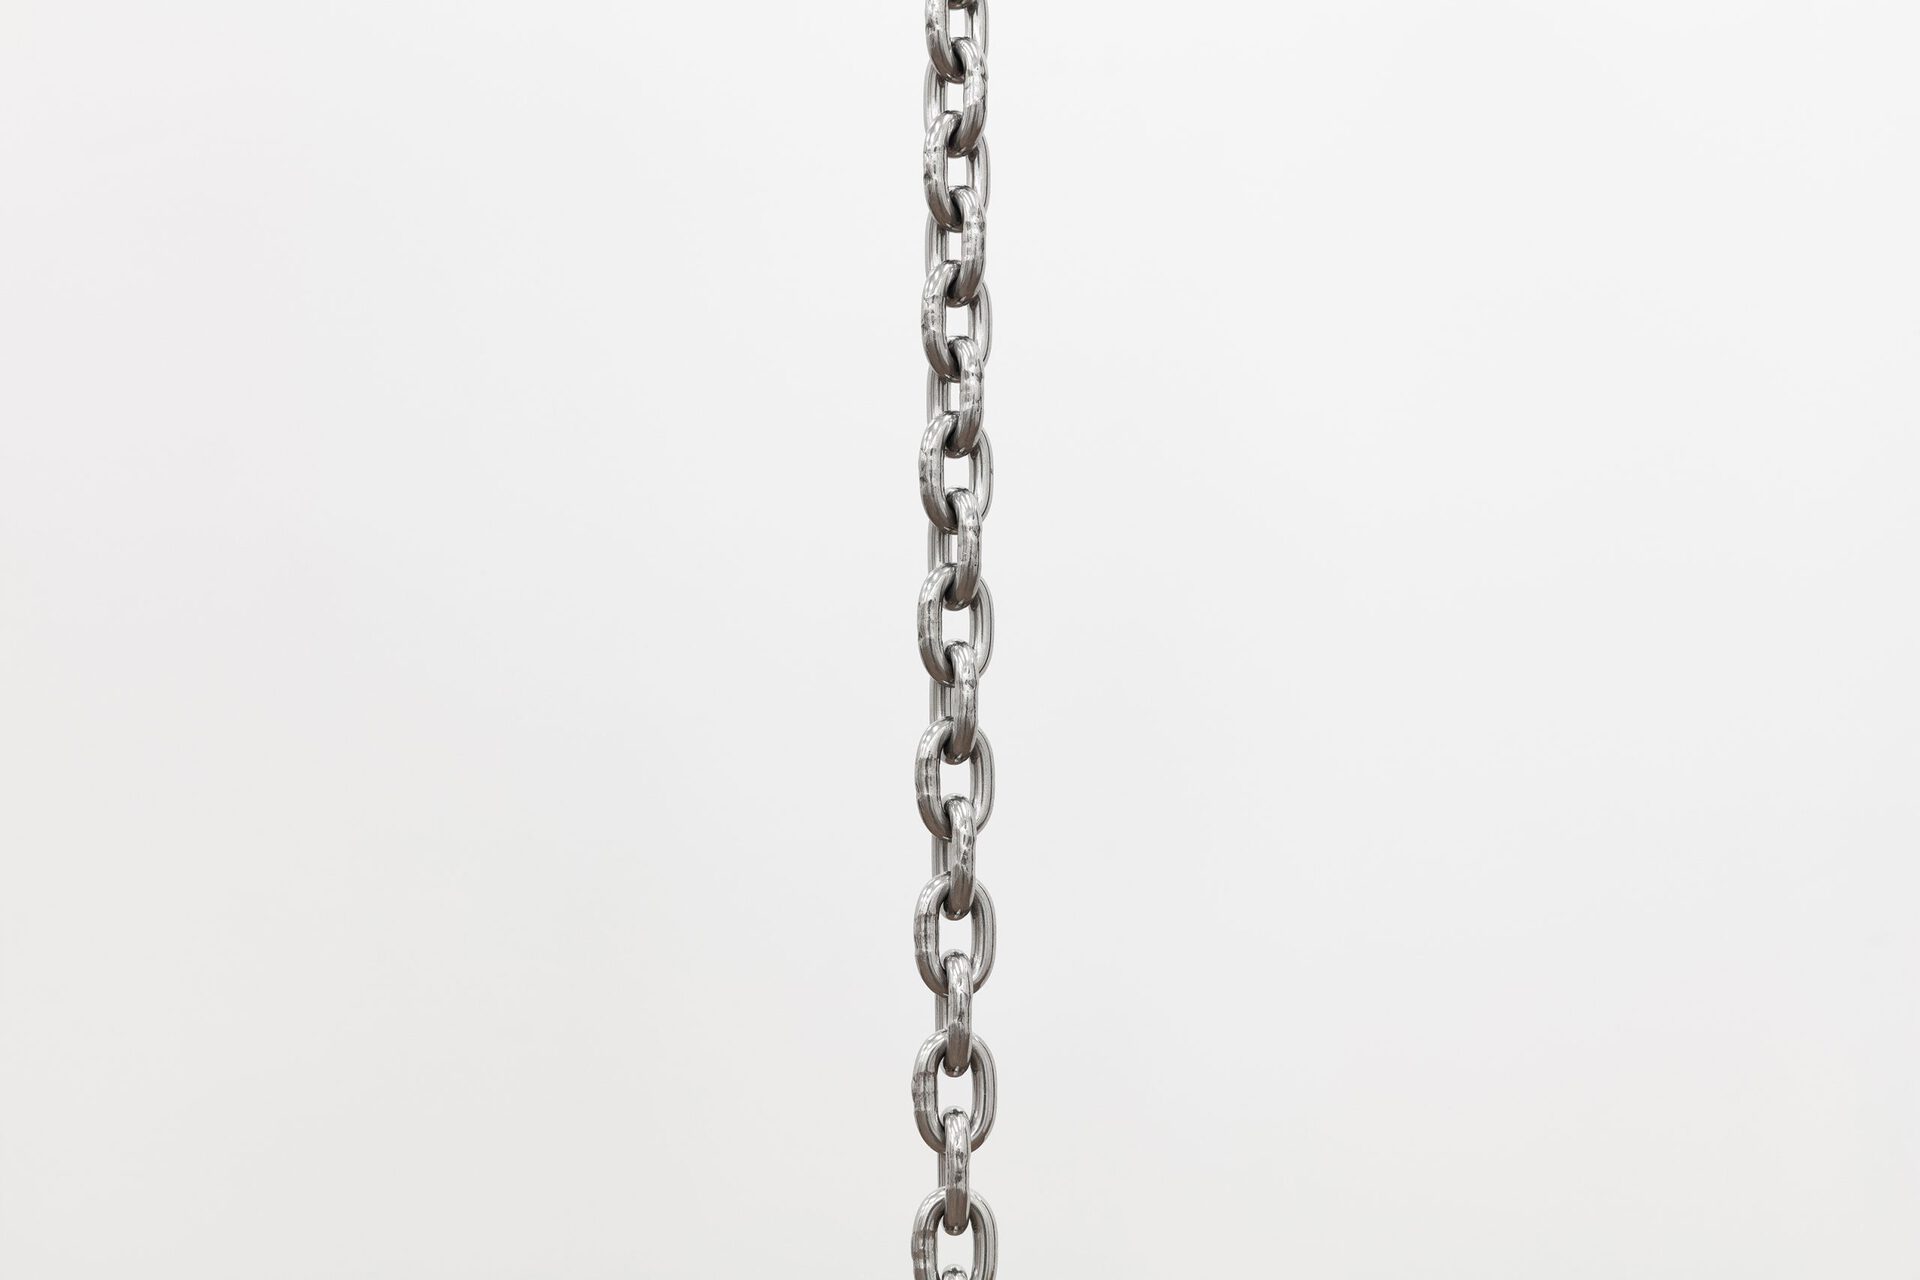 Olof Marsja, Den Fyrhövdade Klockan – The Four Headed Bell (detail), 2022 (Stoneware, stainless steel, approx. 250 x 24 x 24 cm).